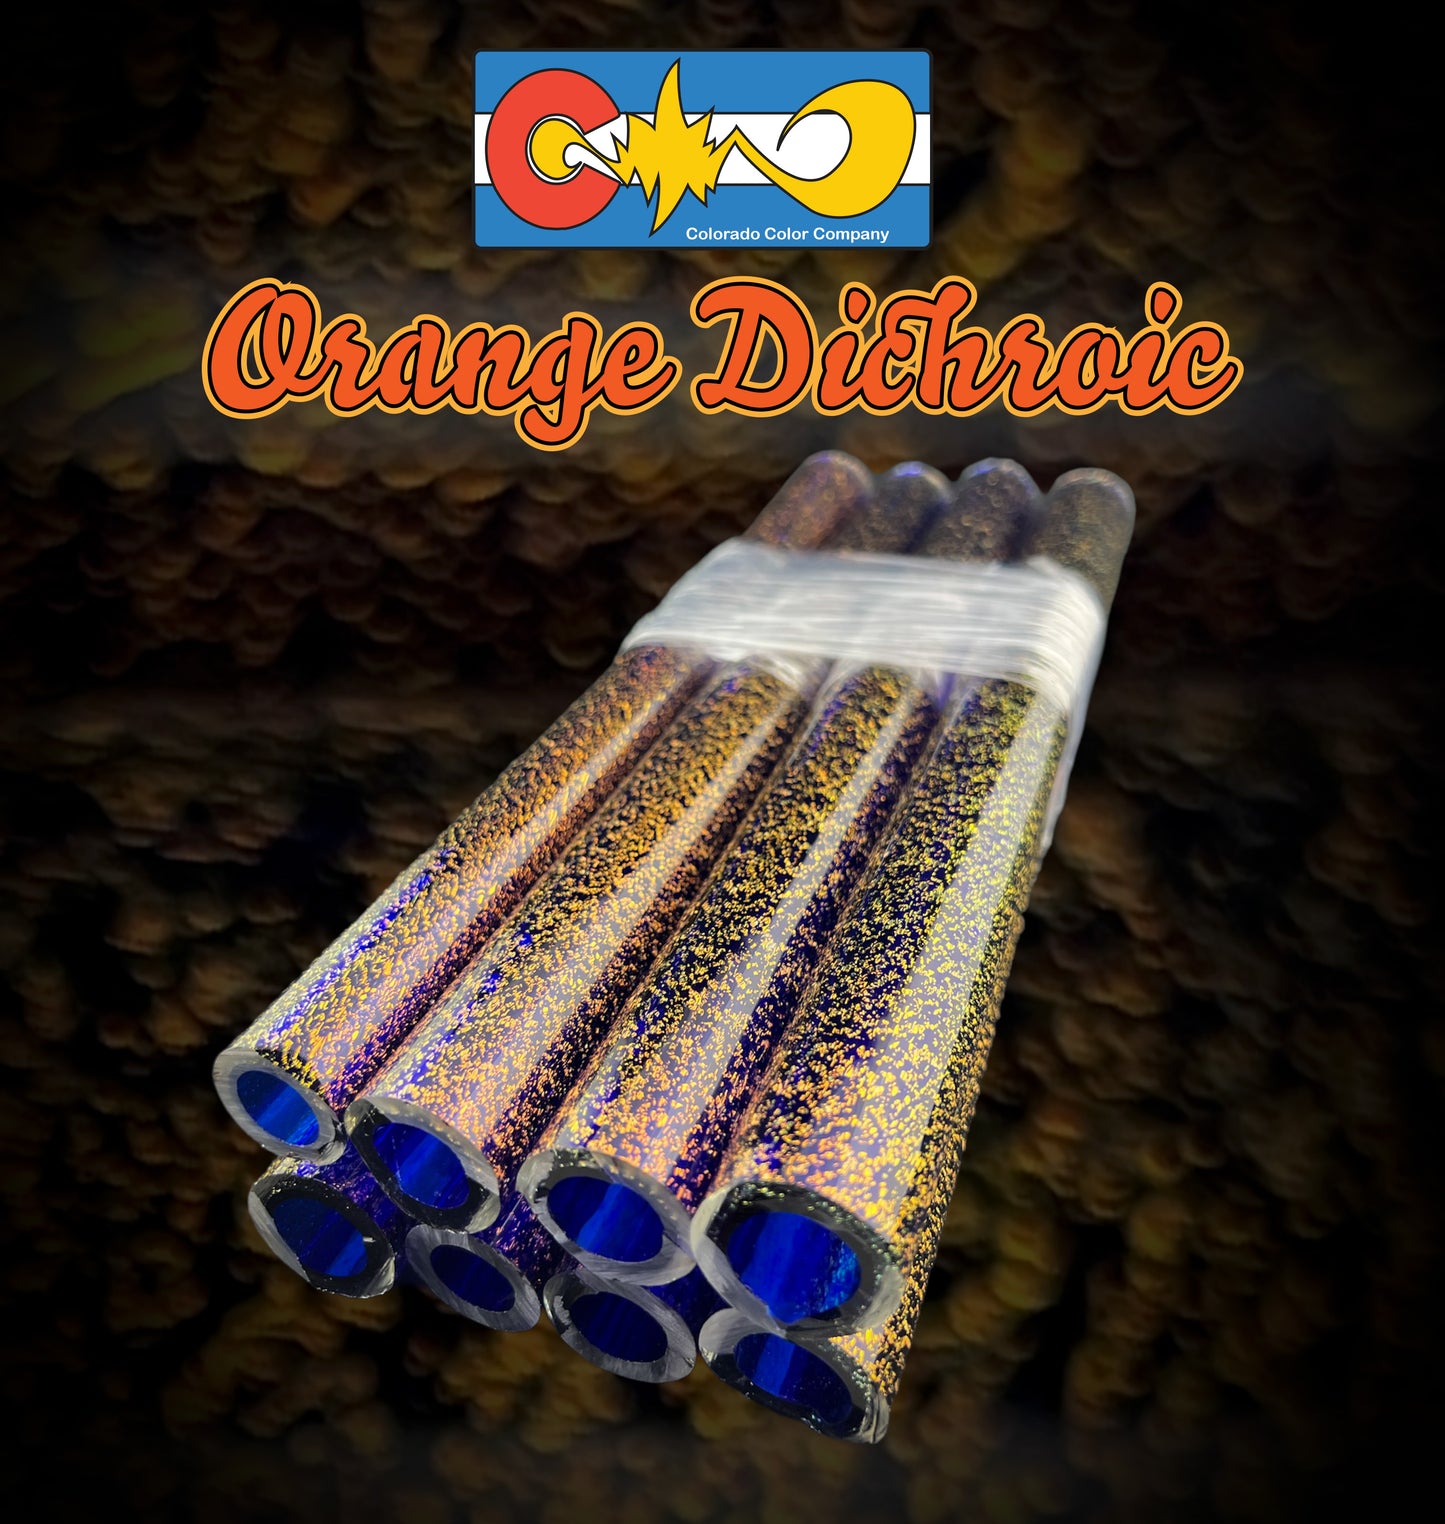 Orange Dichroic - Cobalt core layer - Borosilicate glass